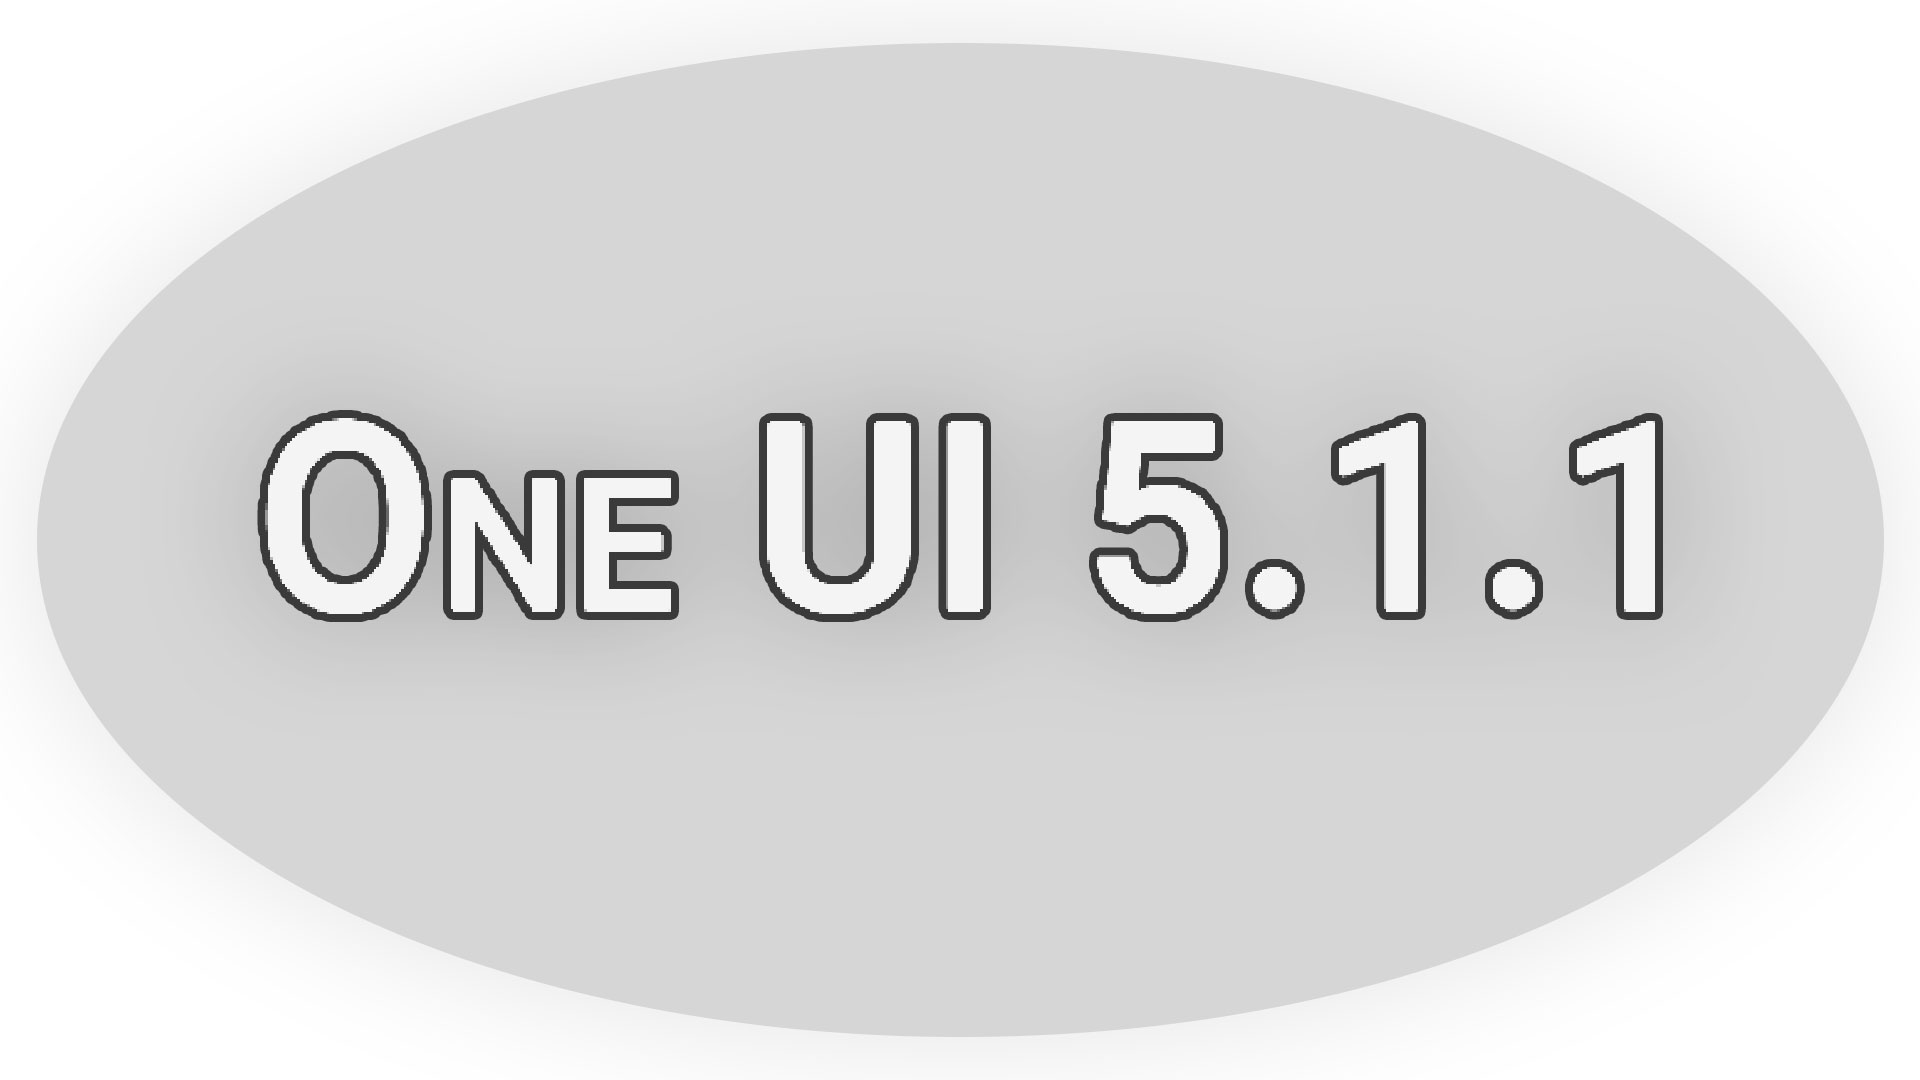 One UI 5.1.1